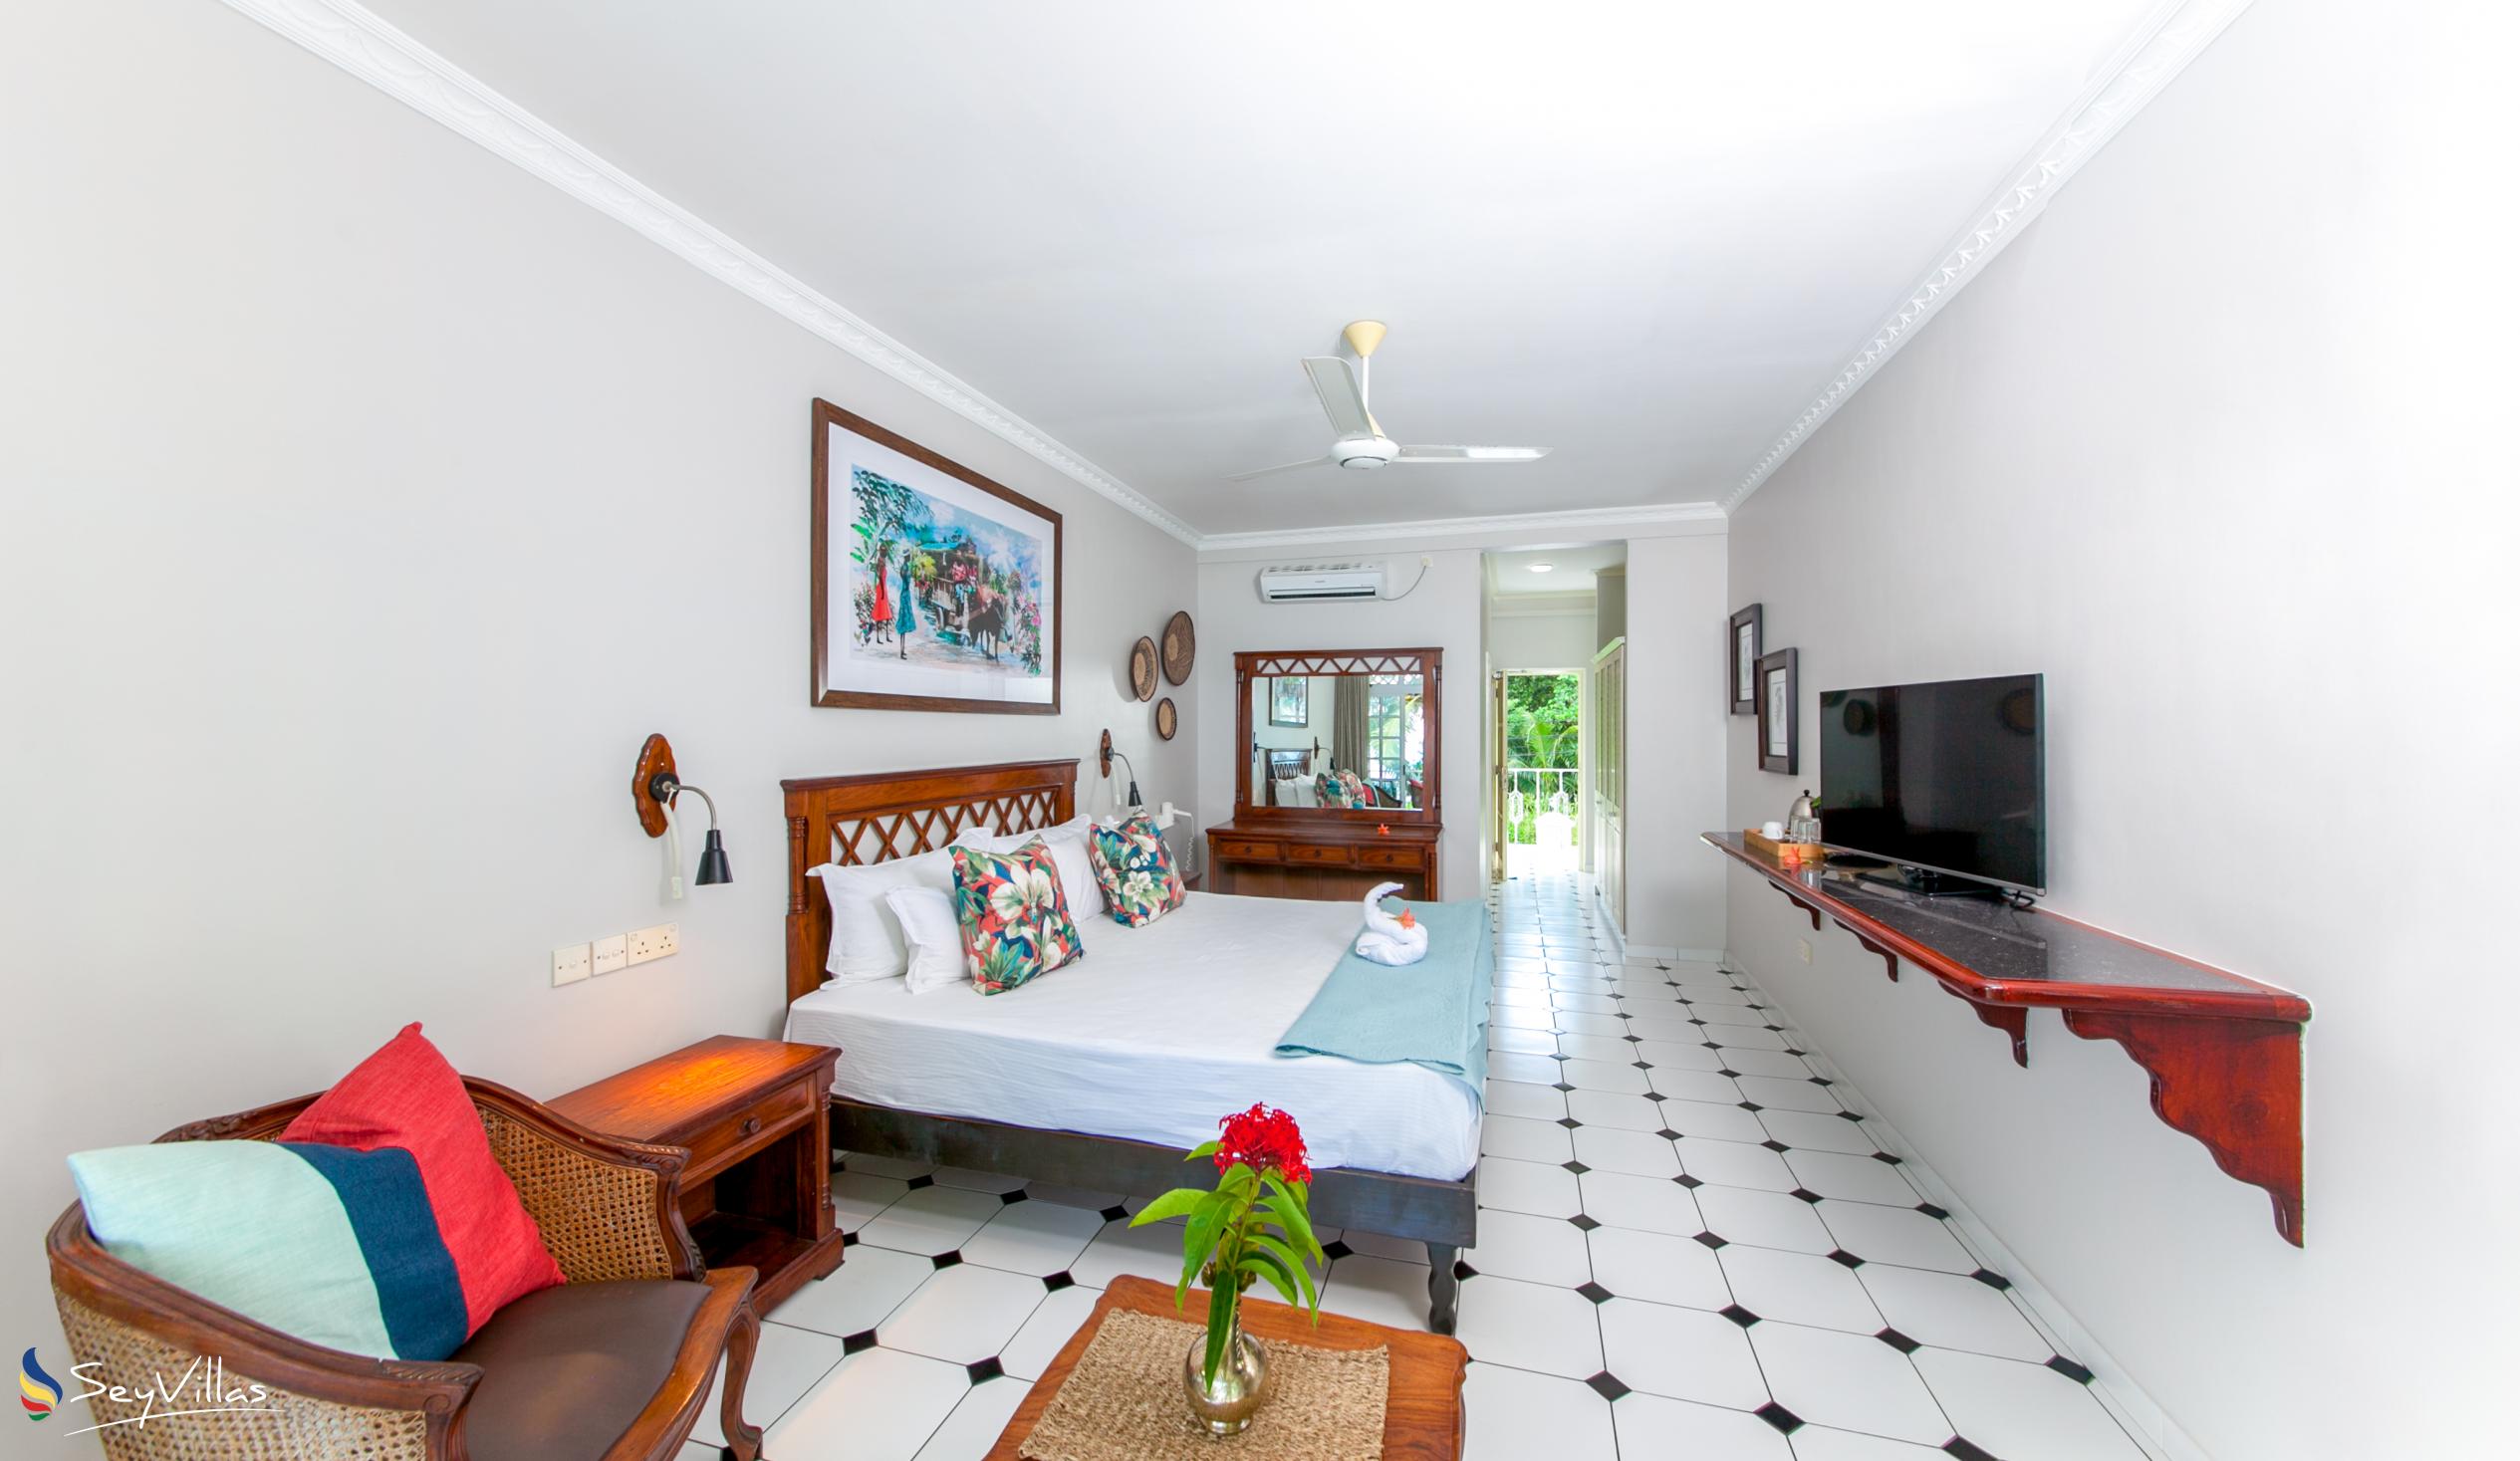 Foto 61: Palm Beach Hotel - Chambre Standard - Praslin (Seychelles)